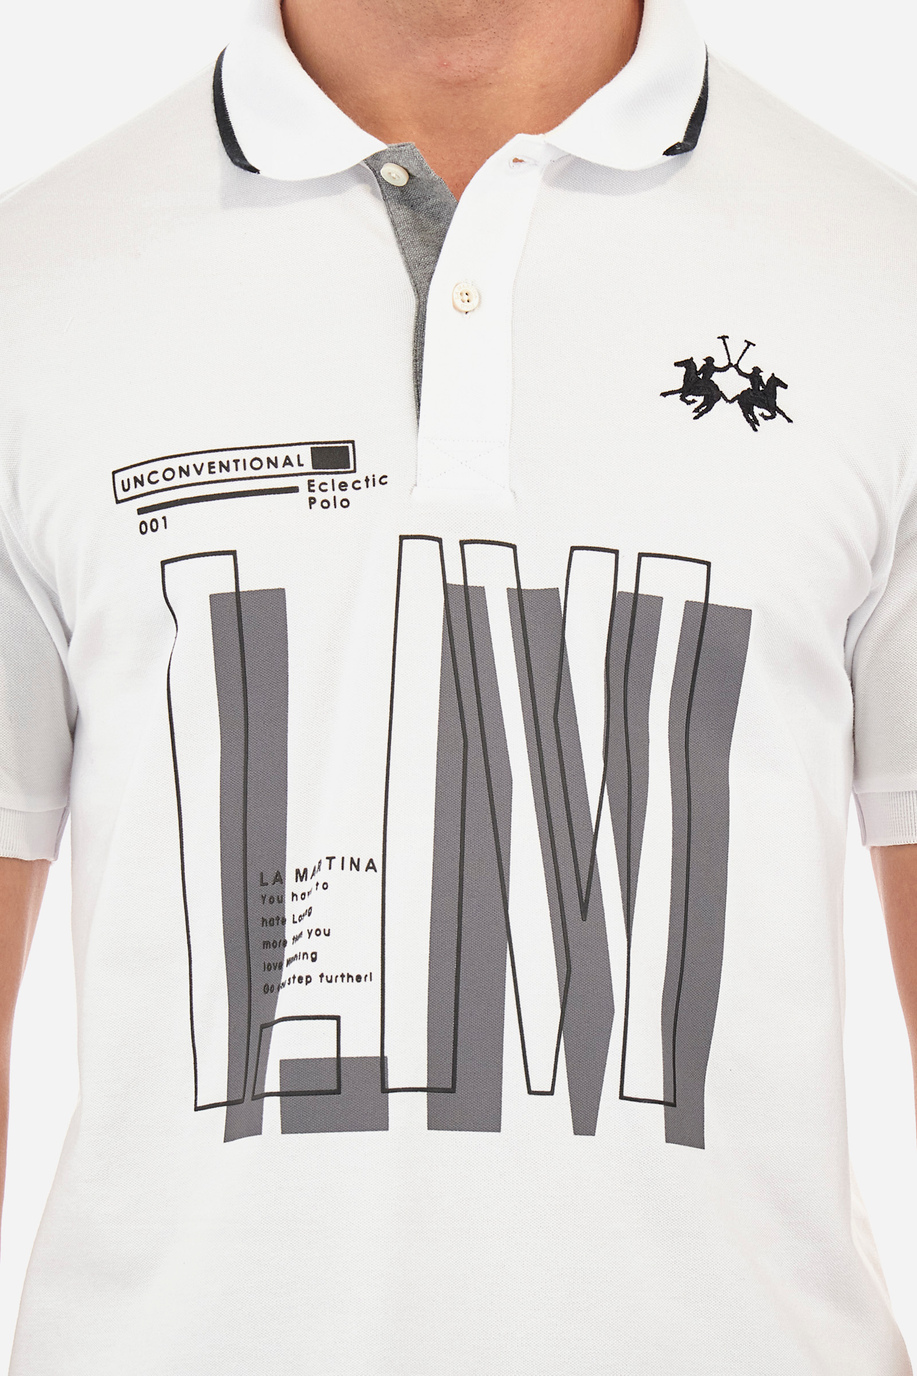 Men's polo shirt in a regular fit - Willett - test 2 | La Martina - Official Online Shop